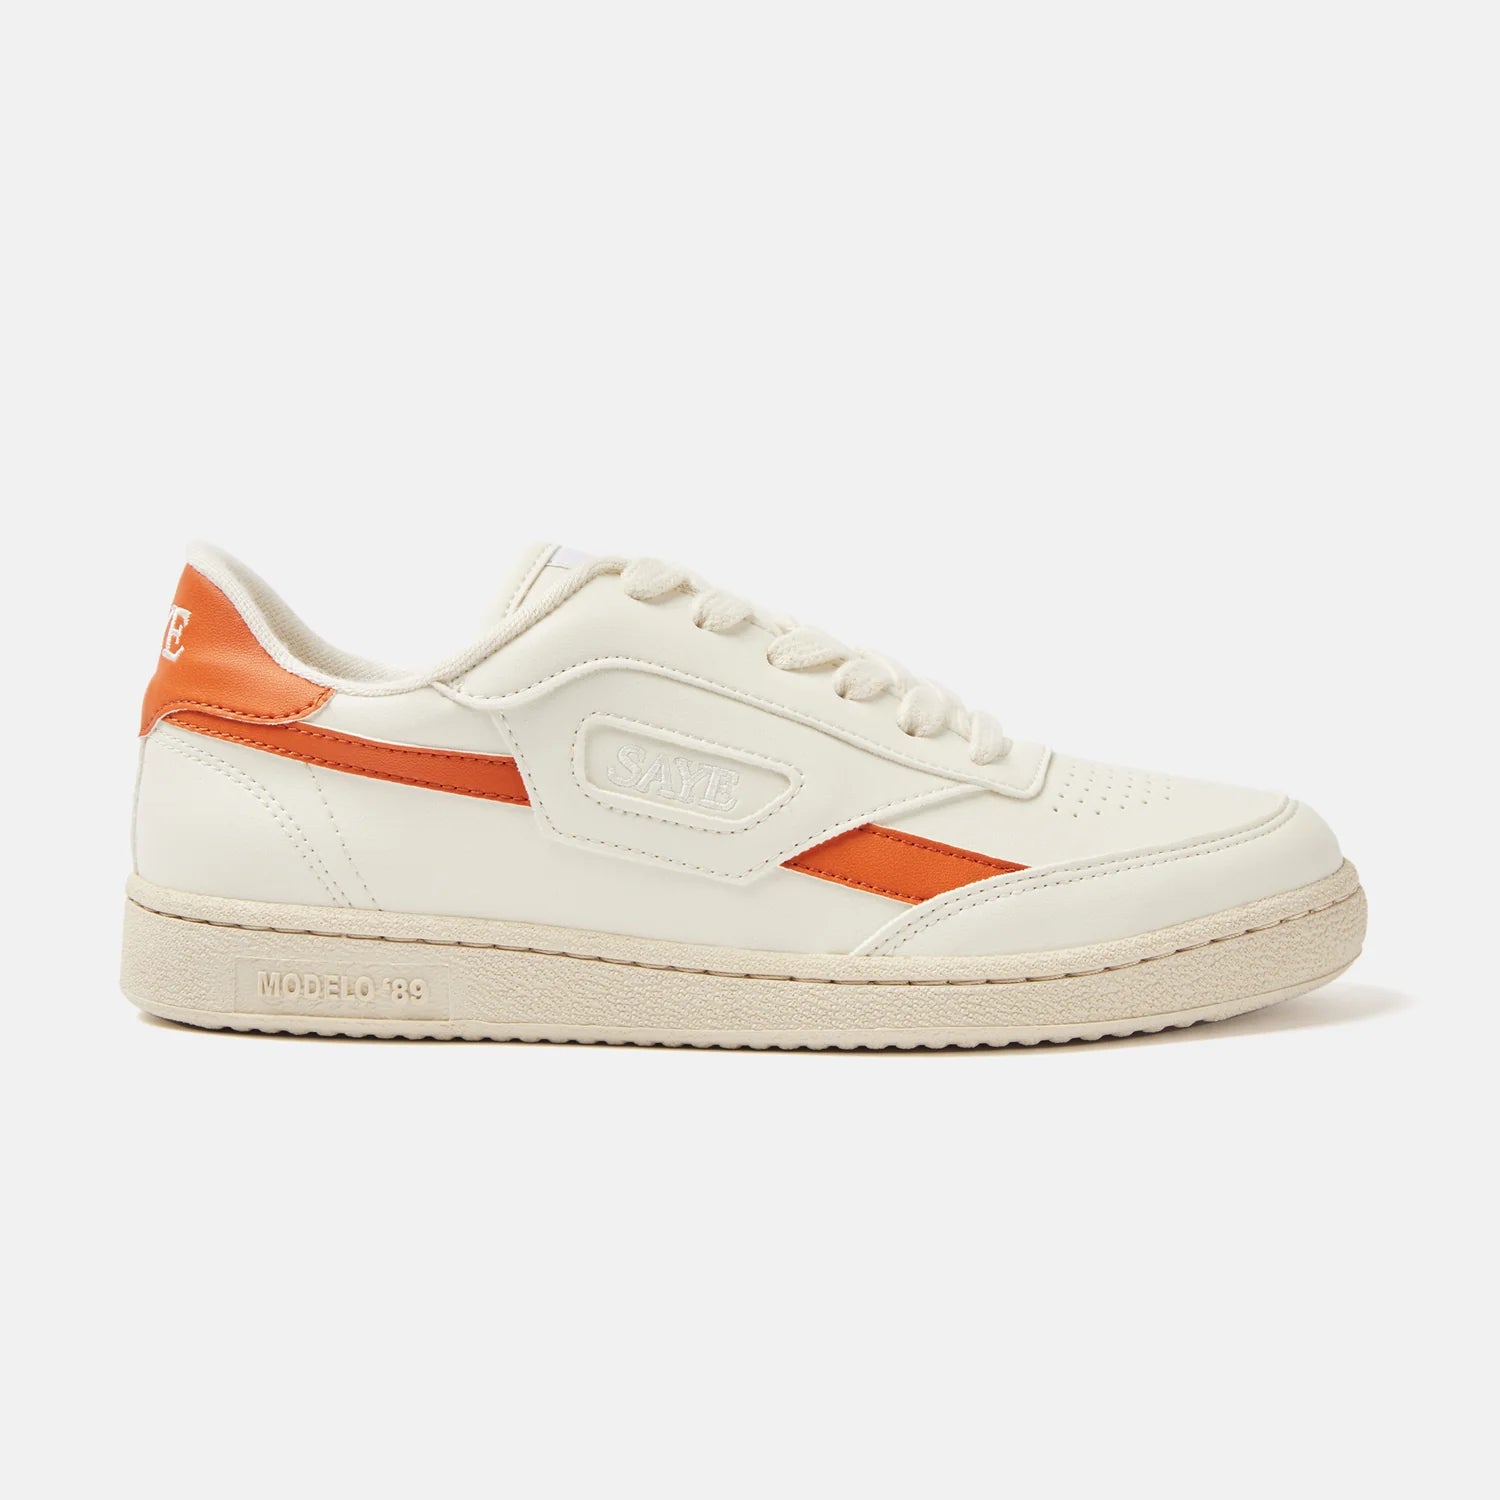 SAYE Modelo '89 Sneakers - Orange against a plain background.